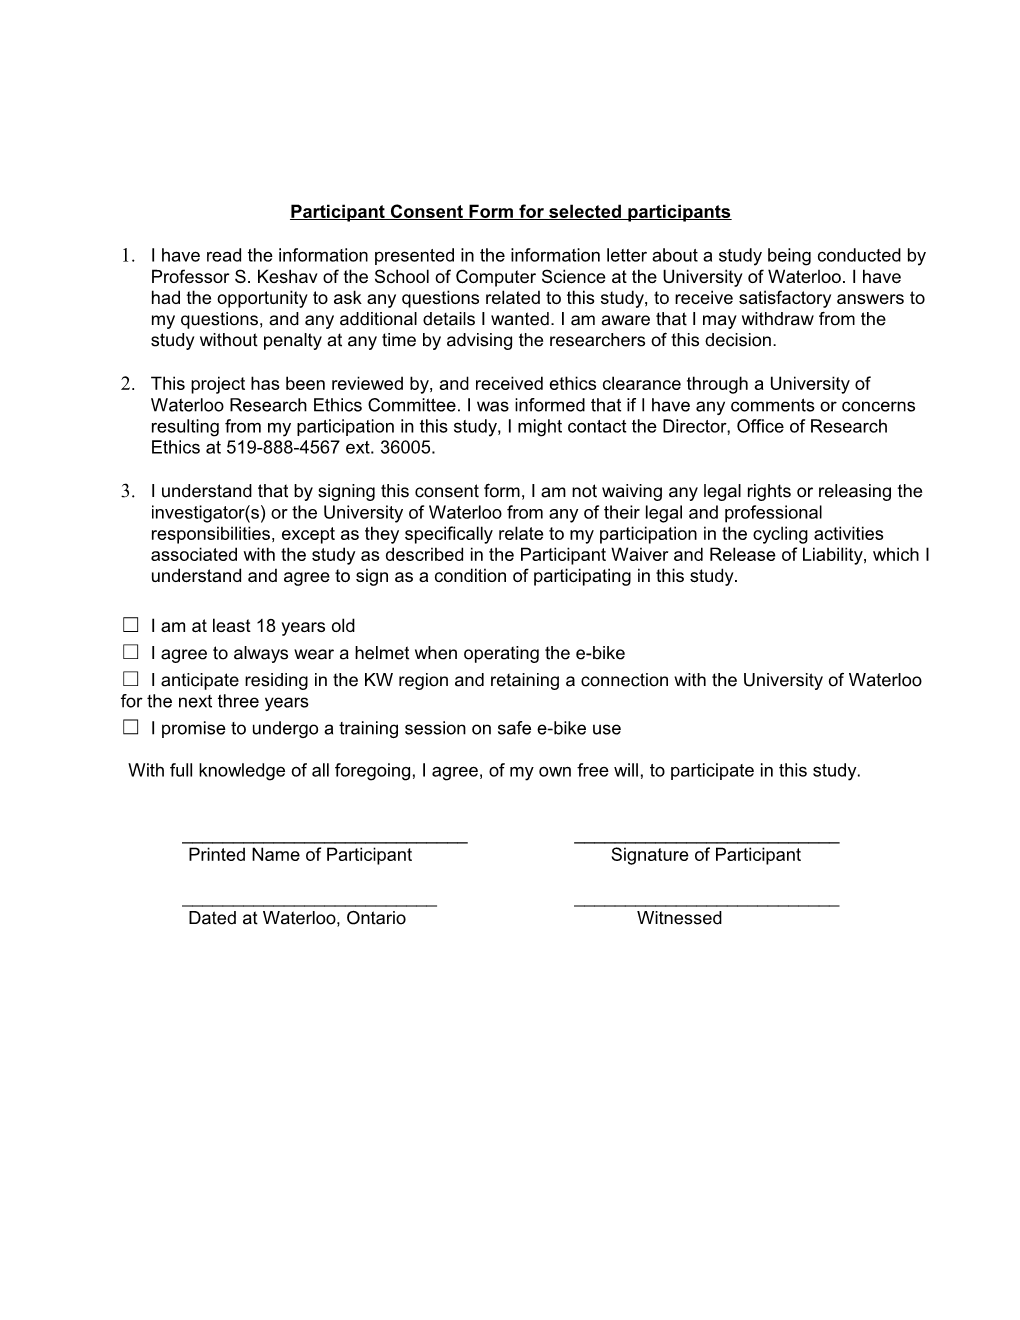 Participant Consent Form for Selected Participants